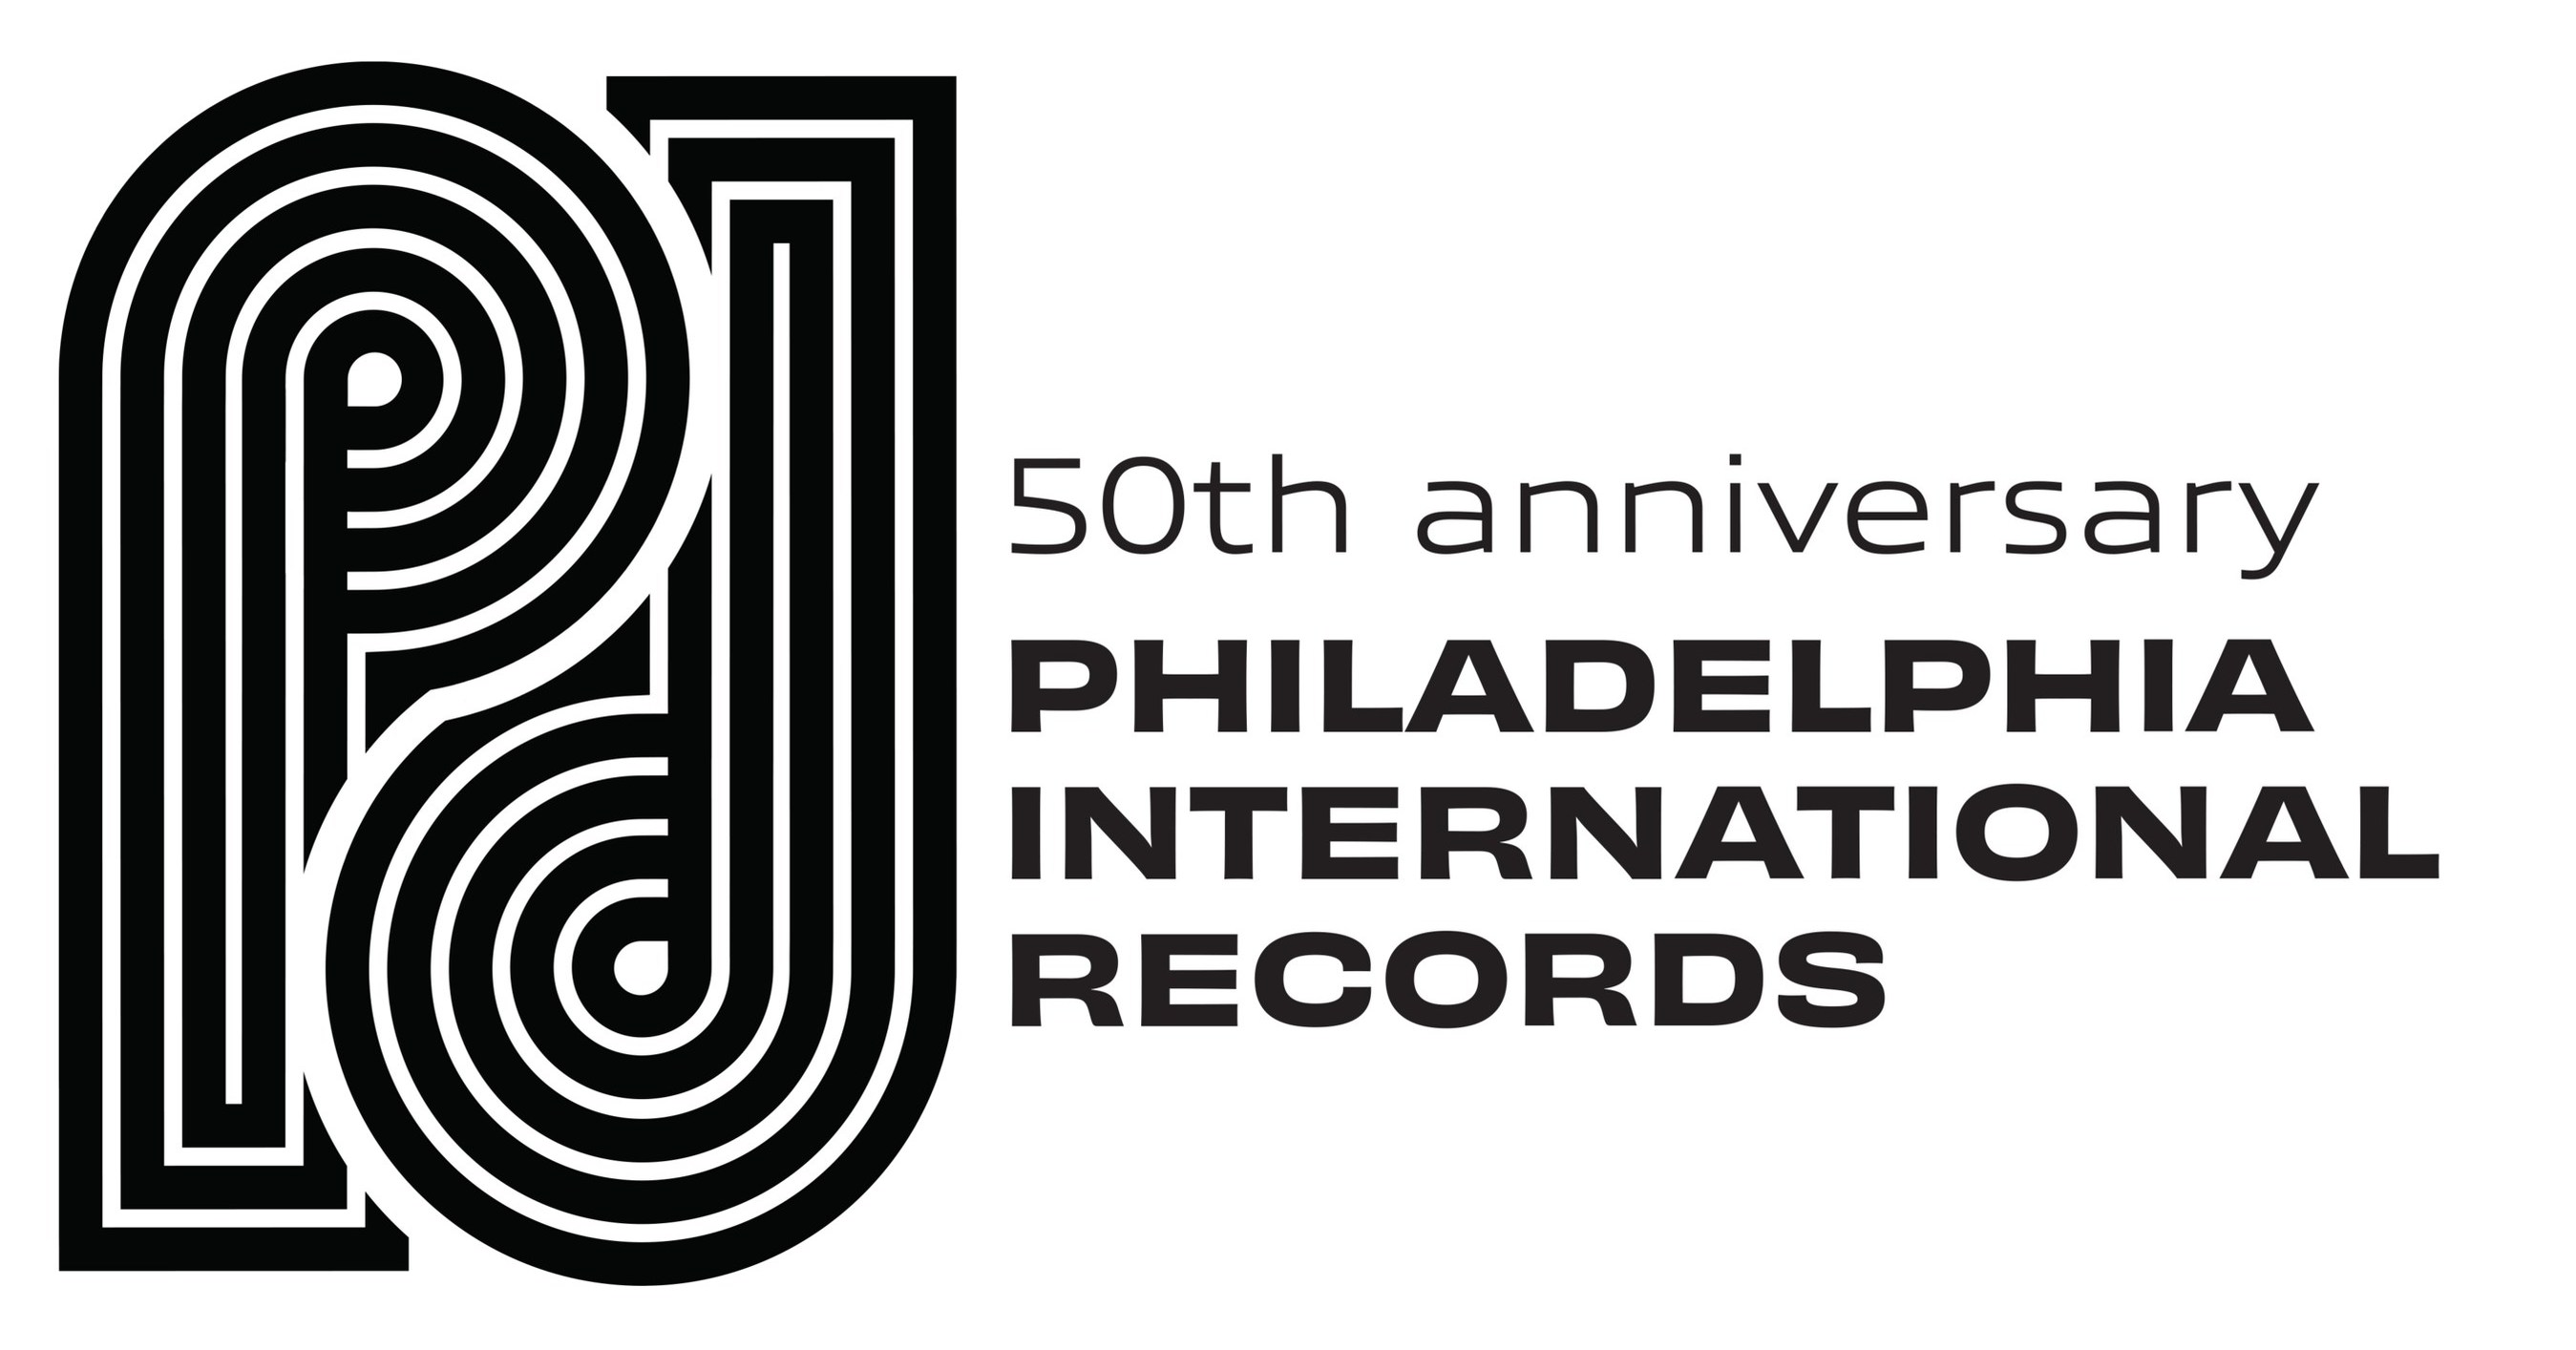 Legendary Music Label Philadelphia International Records Celebrates